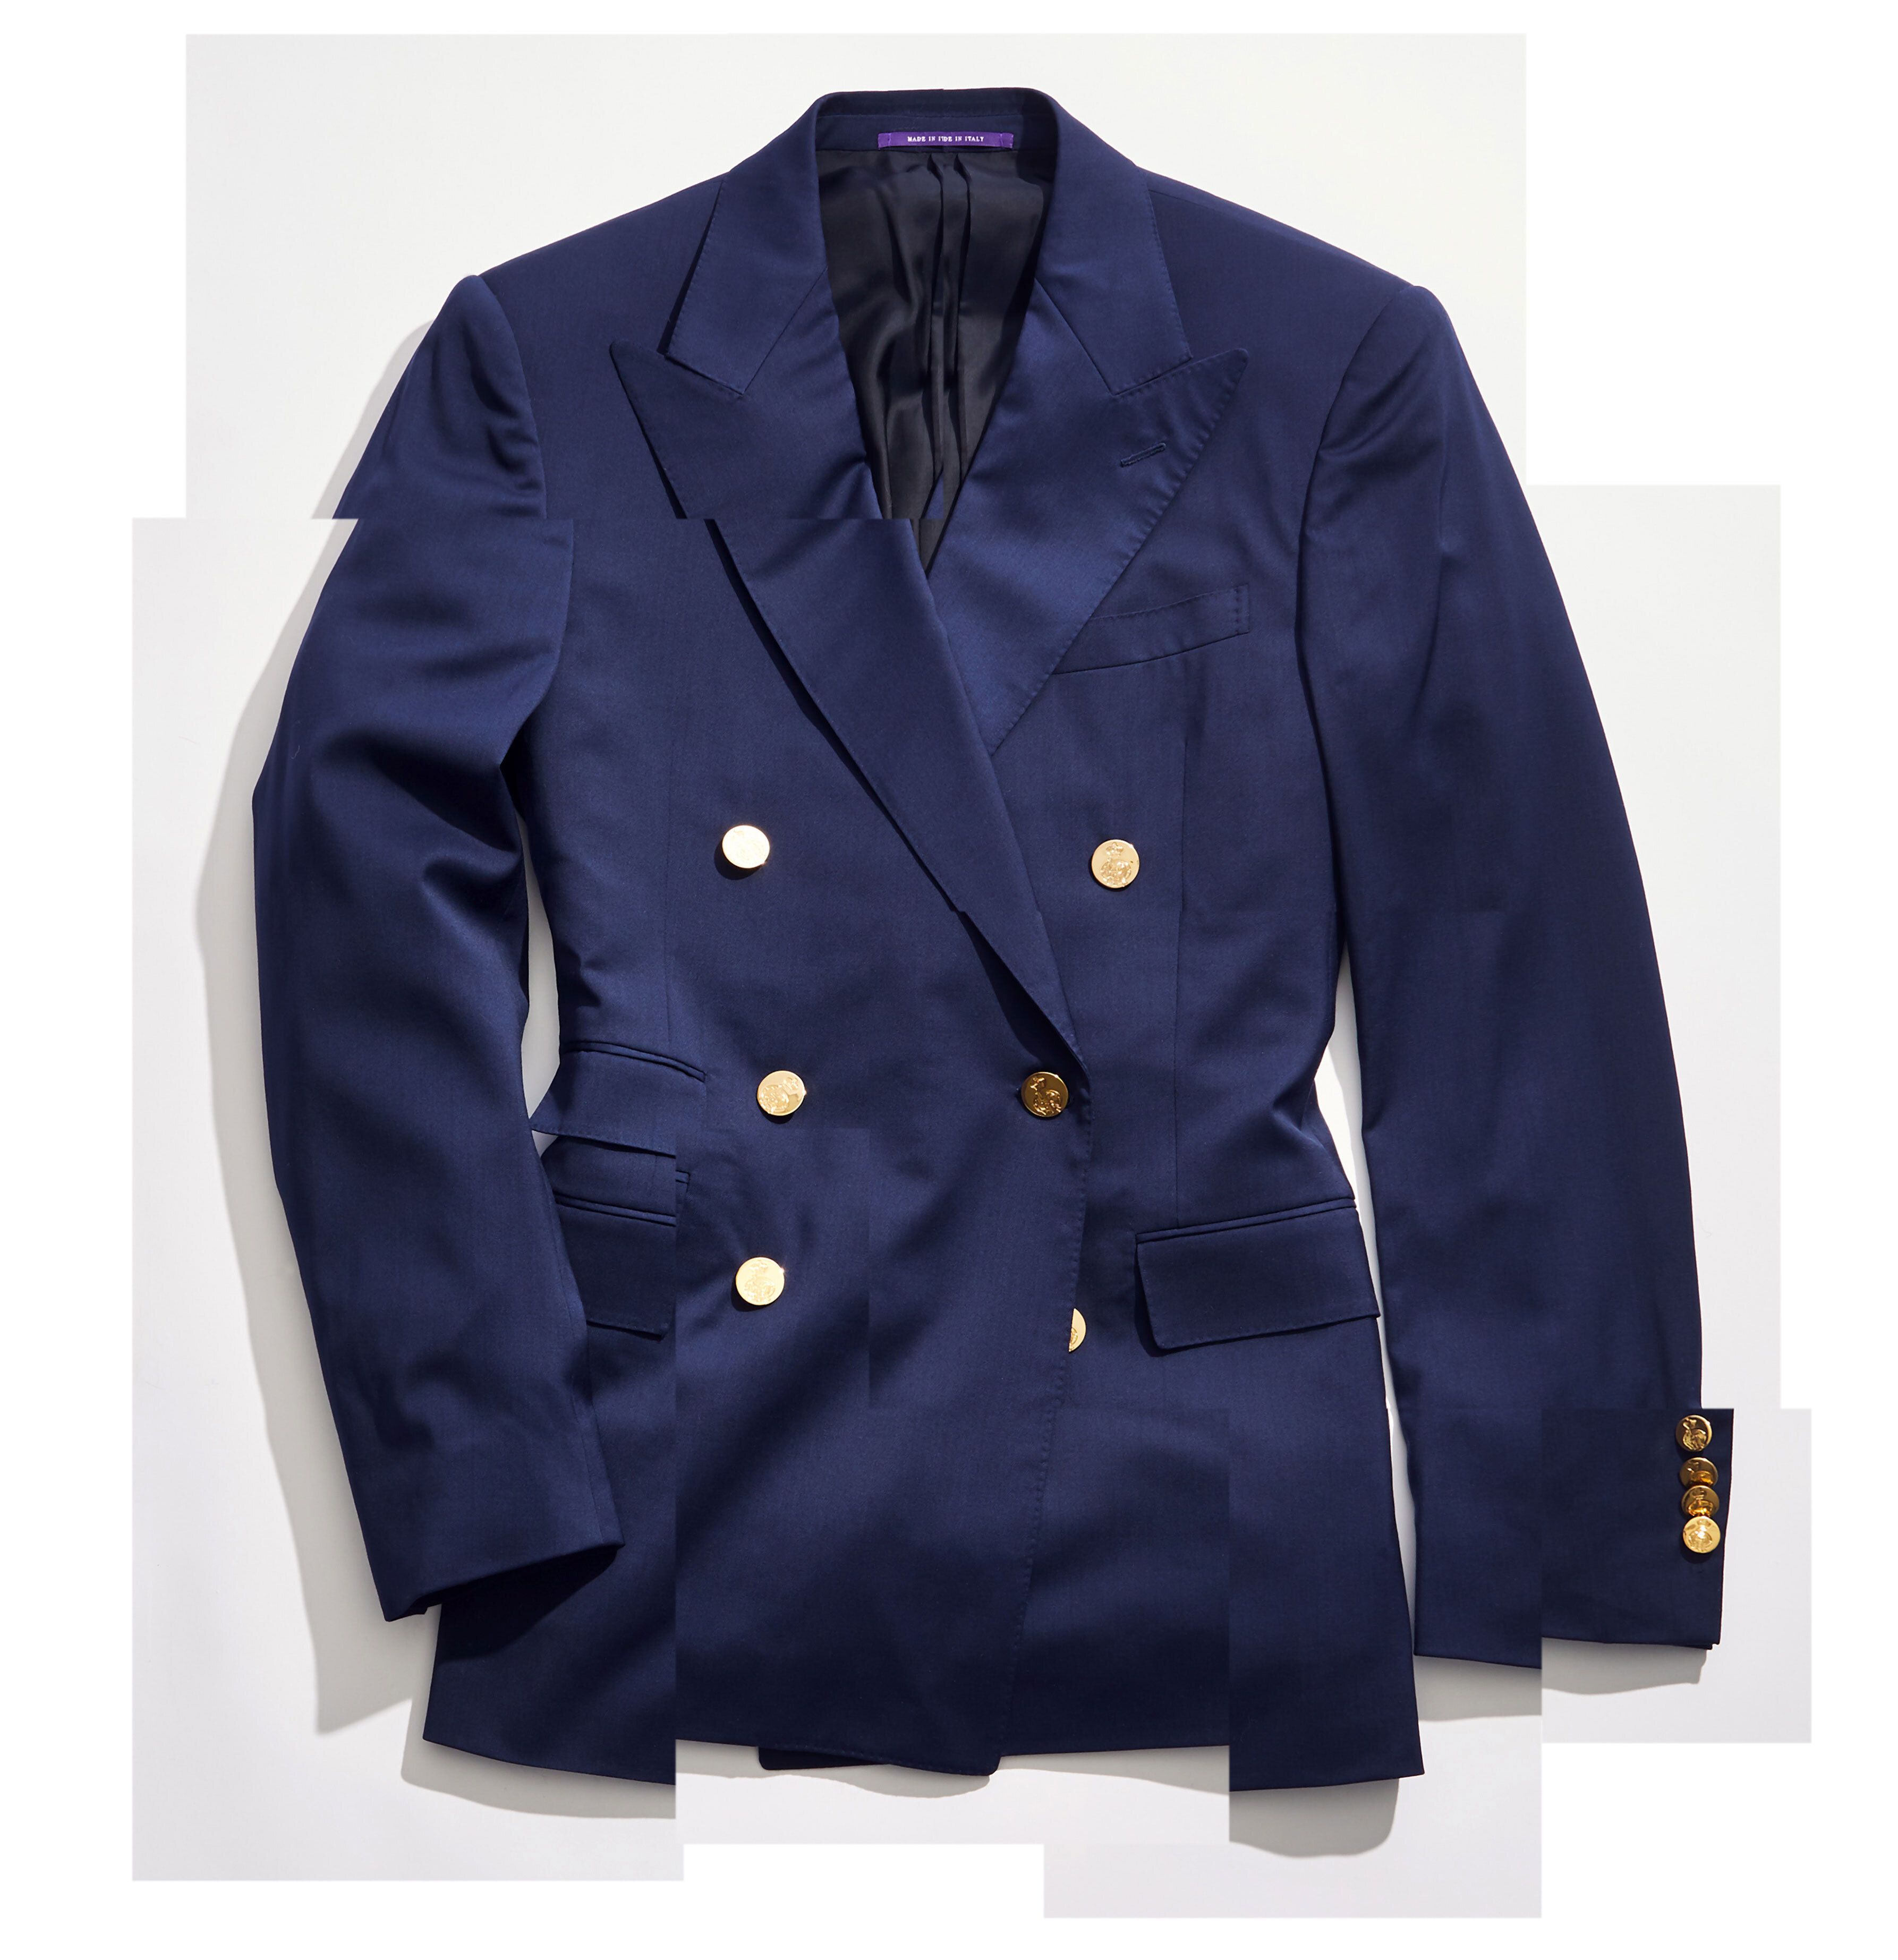 Ralph Lauren Purple Label Navy Double-Breasted Blazer Review